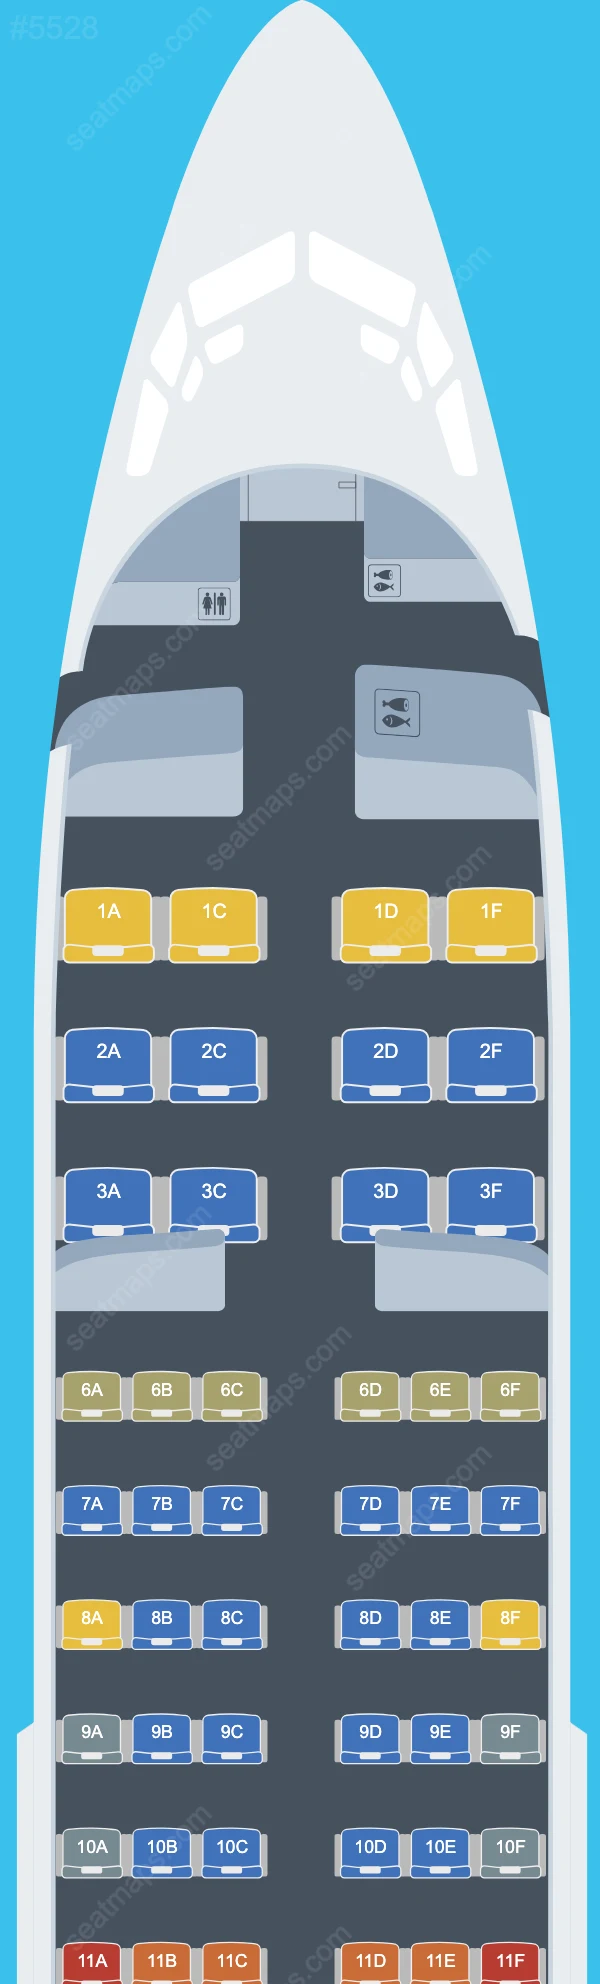 Arik Air Boeing 737 Seat Maps 737-700 V.2